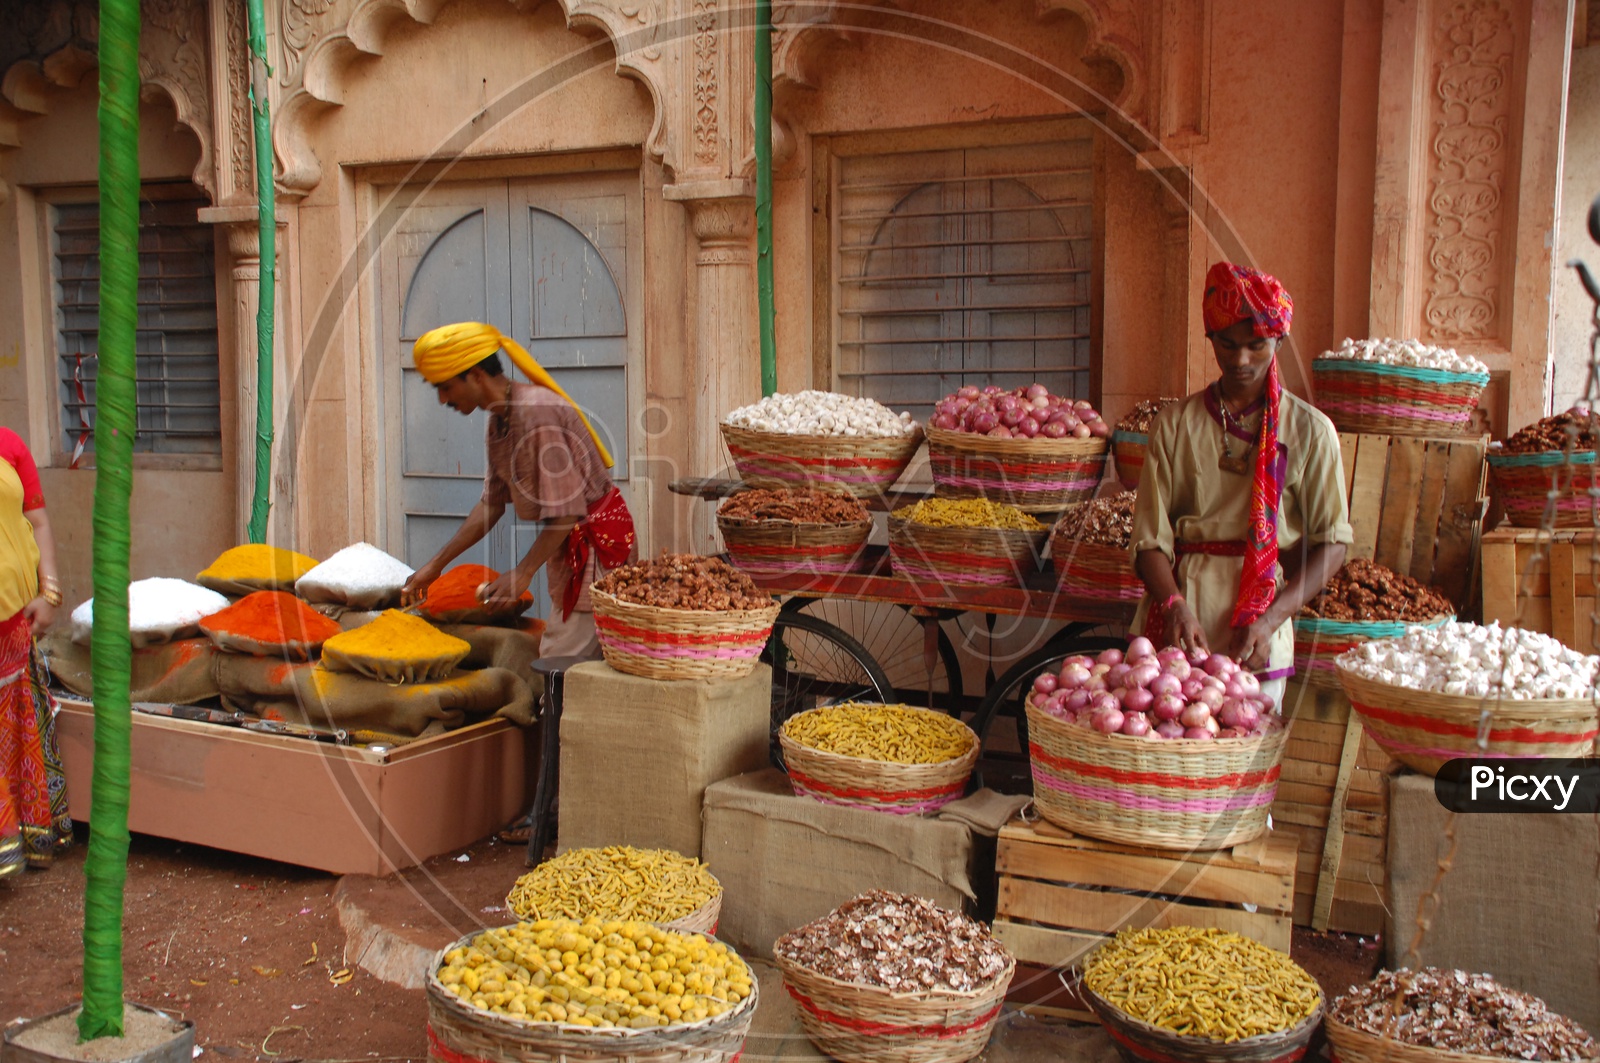 Markets And Stalls in an Rural Village Market